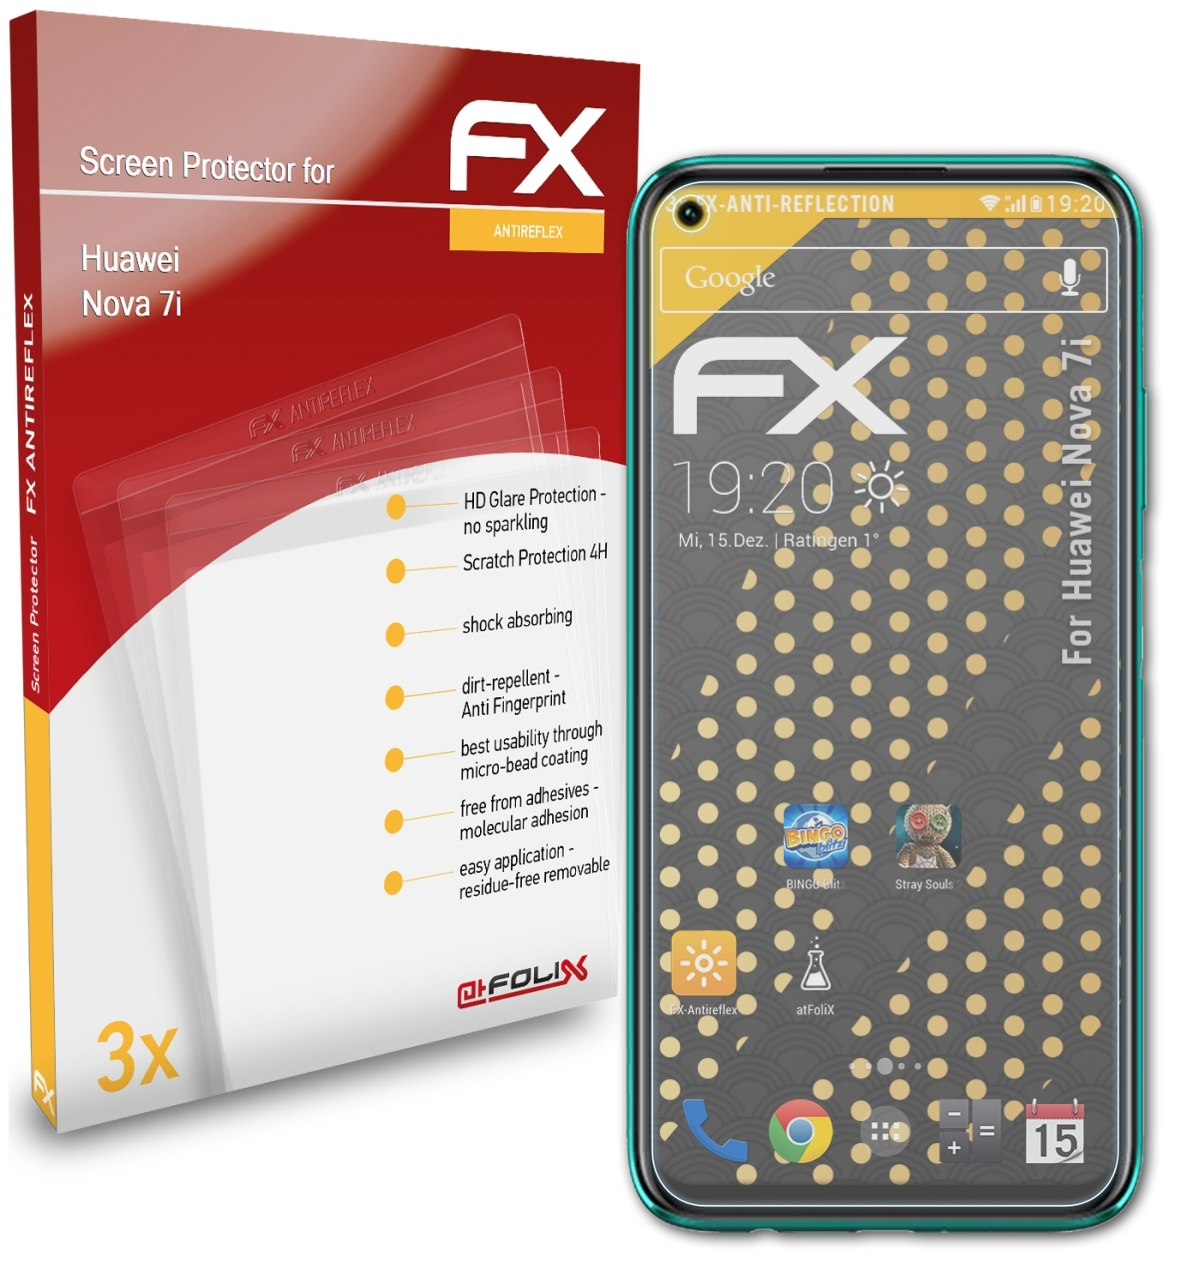 ATFOLIX 7i) Nova 3x FX-Antireflex Huawei Displayschutz(für